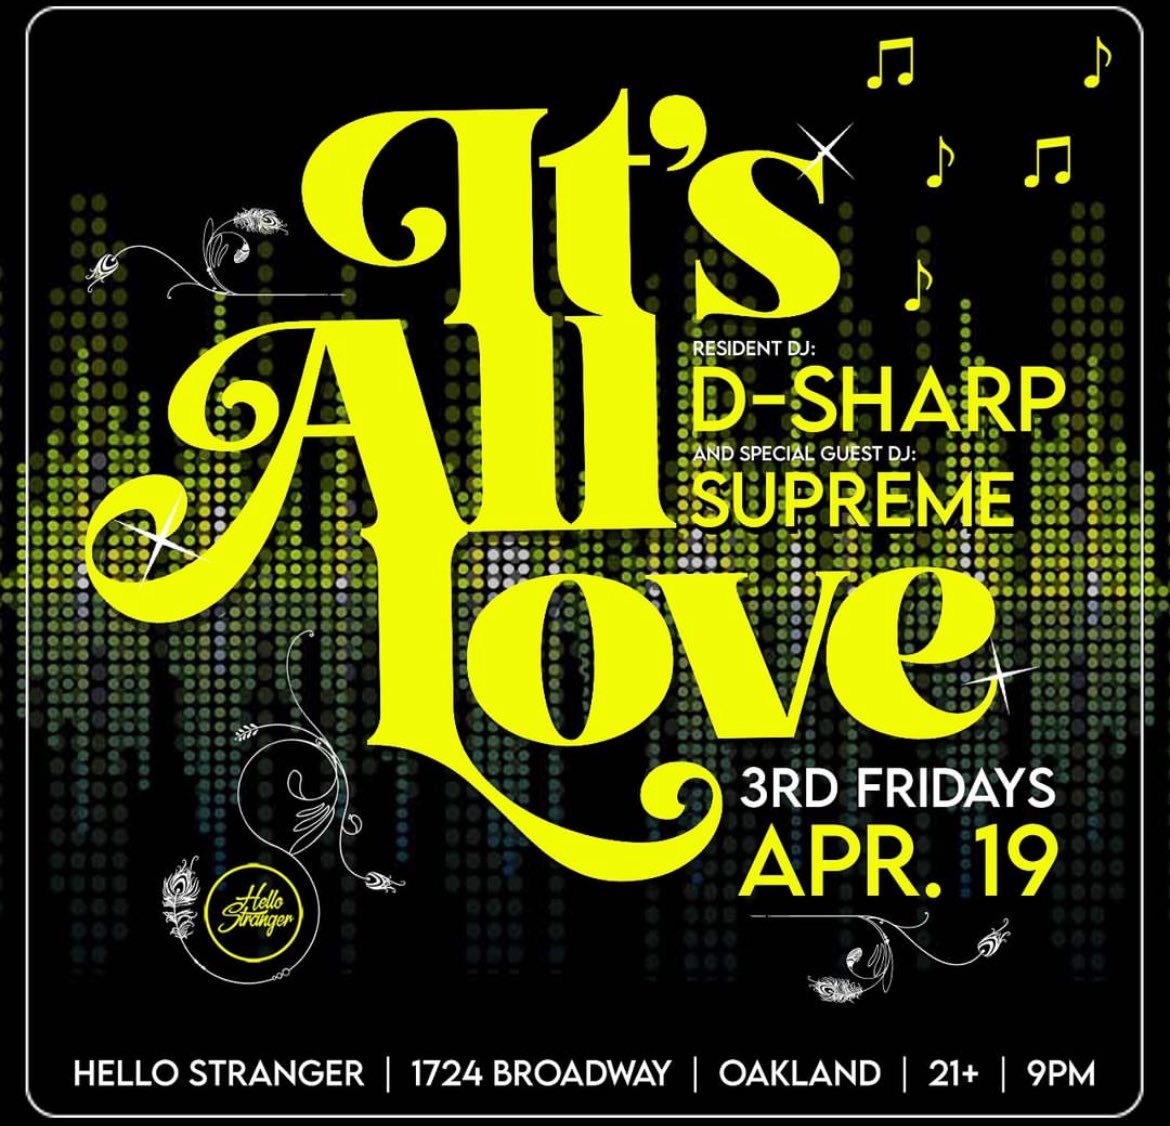 Tonight We Are LIVE in Oakland 
'It's All Love'  @HelloStrangeBar 
Beats by LL Supreme & @djdsharp 

#partyhard #hiphop #oakland #originaldjs